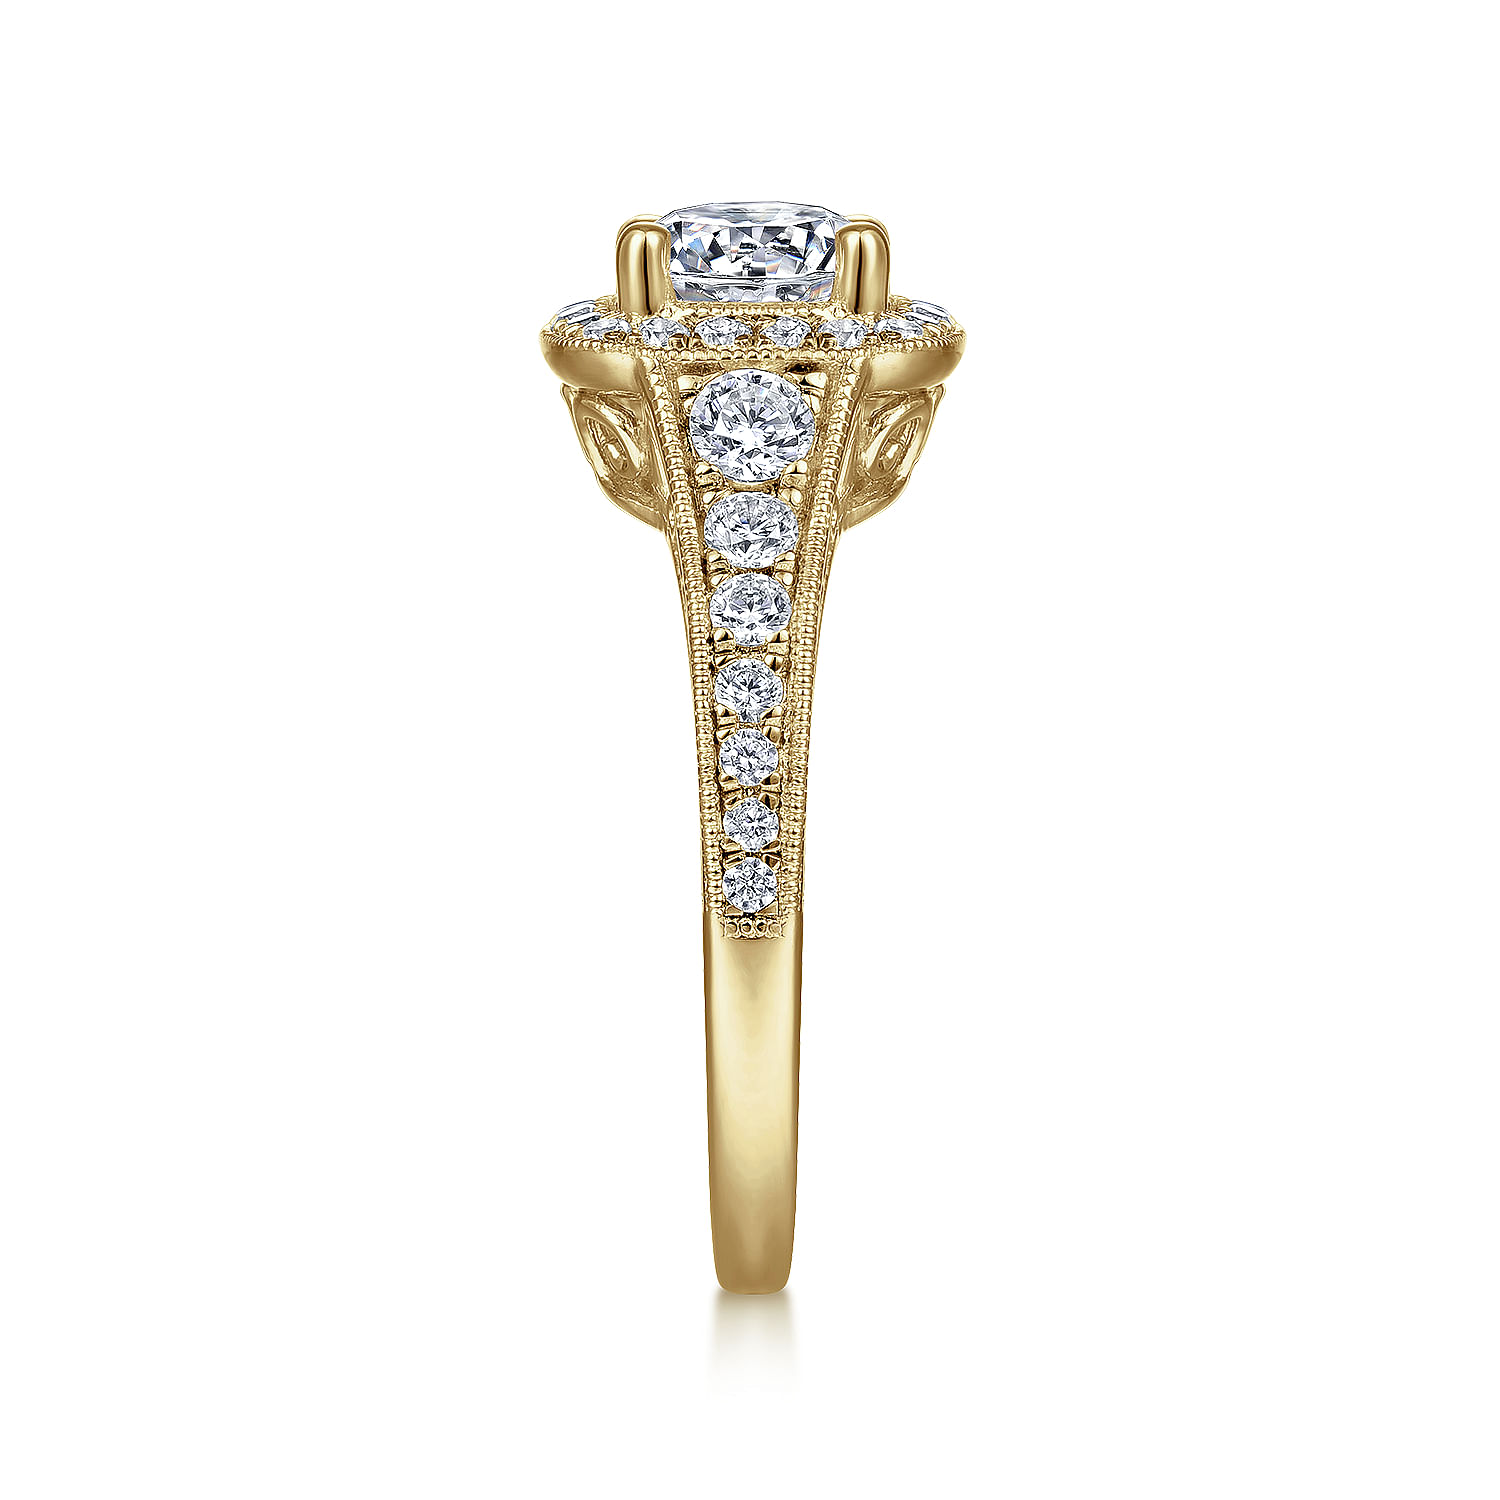 Vintage Inspired 14K Yellow Gold Cushion Halo Round Diamond Engagement Ring